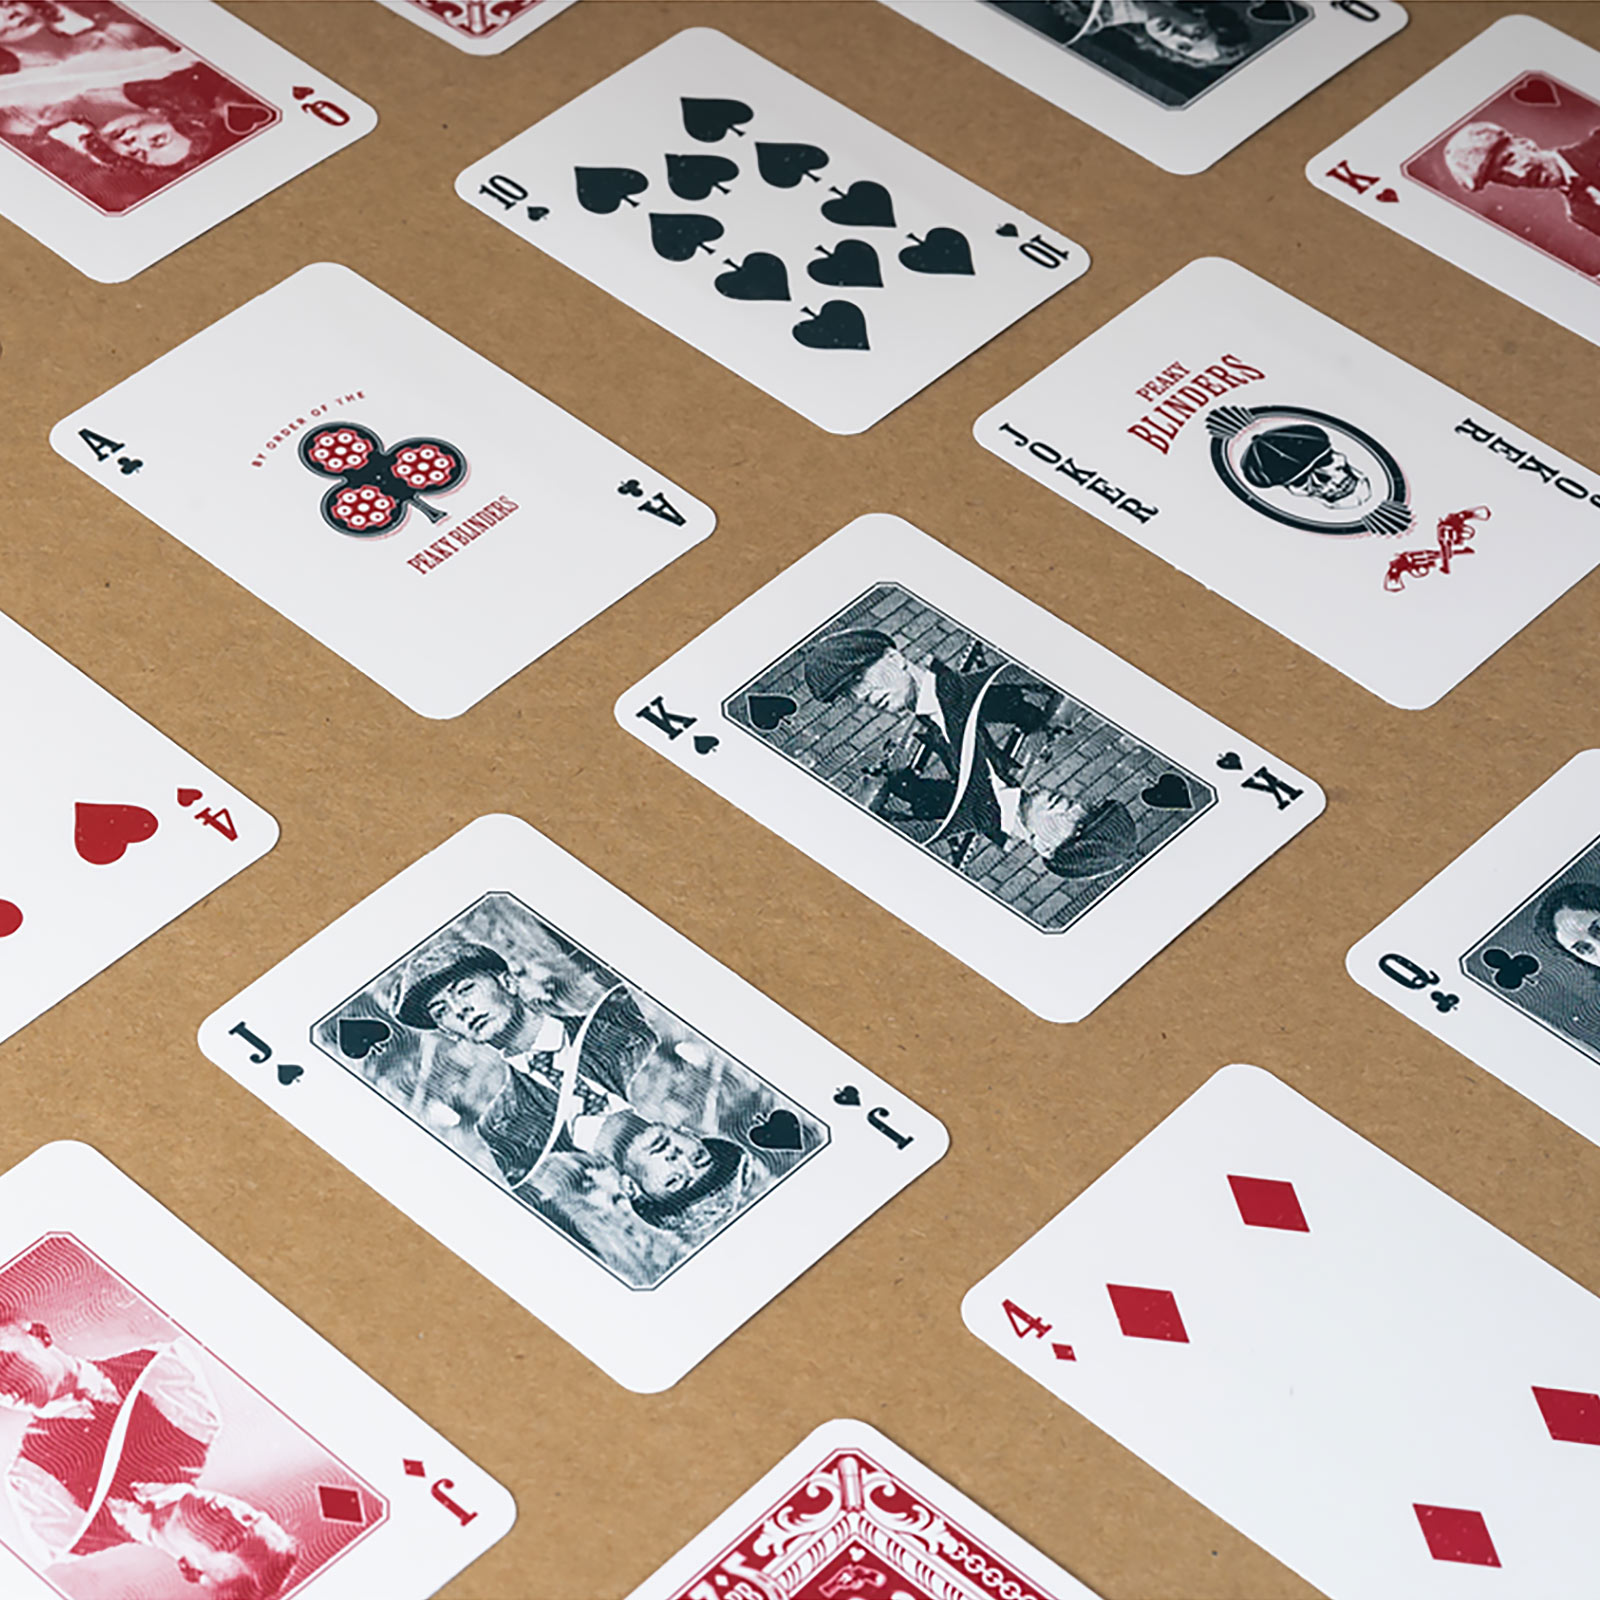 Peaky Blinders - Playing Cards